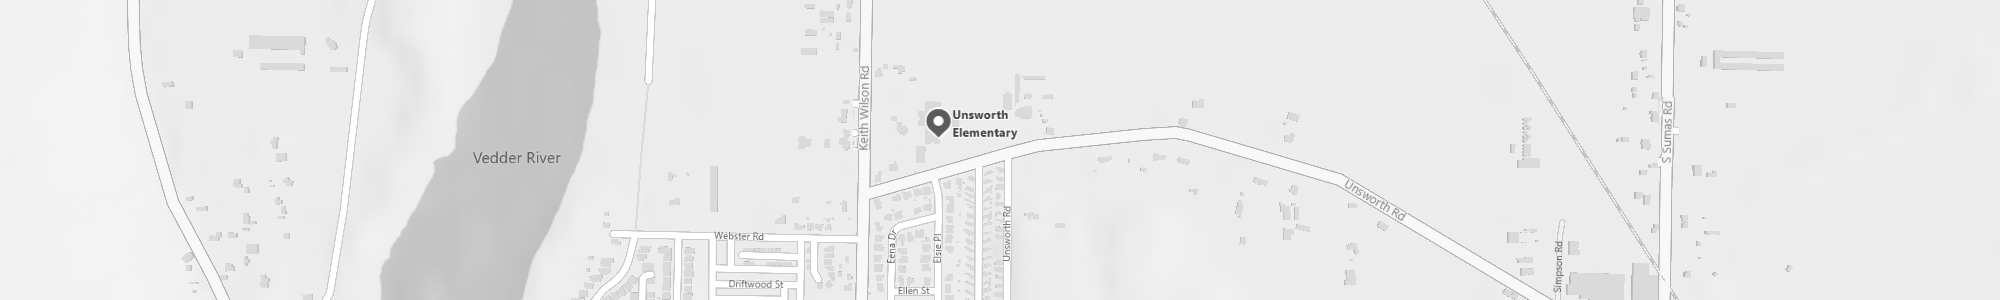 Unsworth_Map